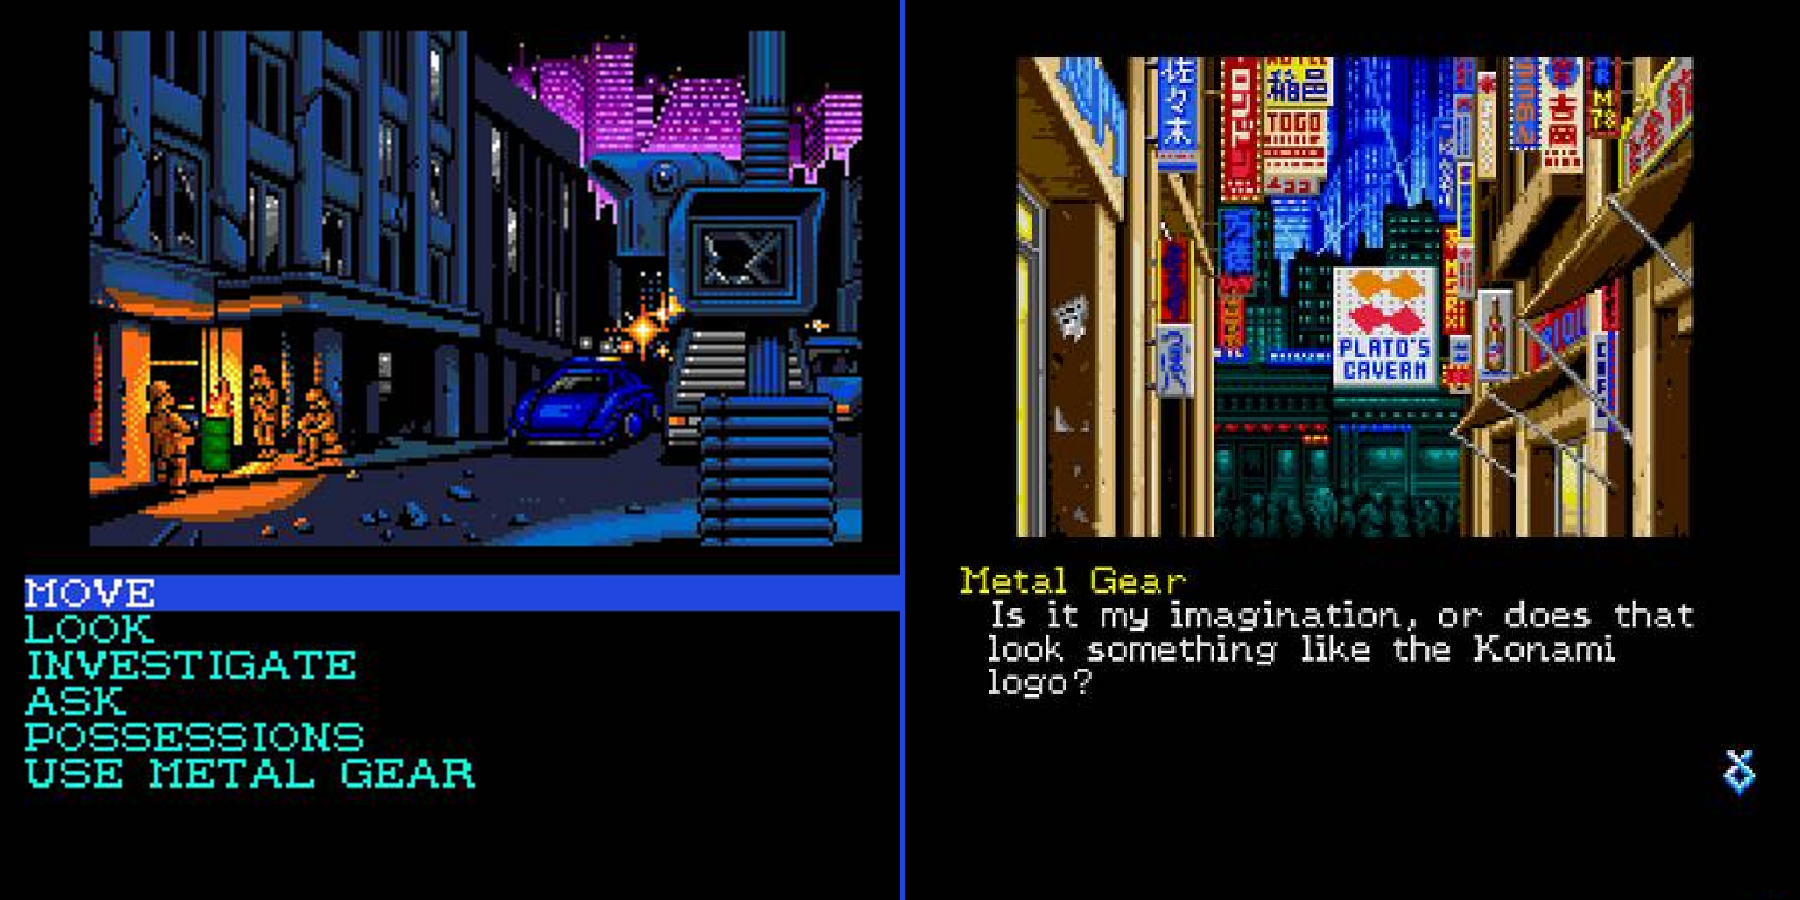 Screenshots of Snatcher, referencing Metal Gear and Konami.